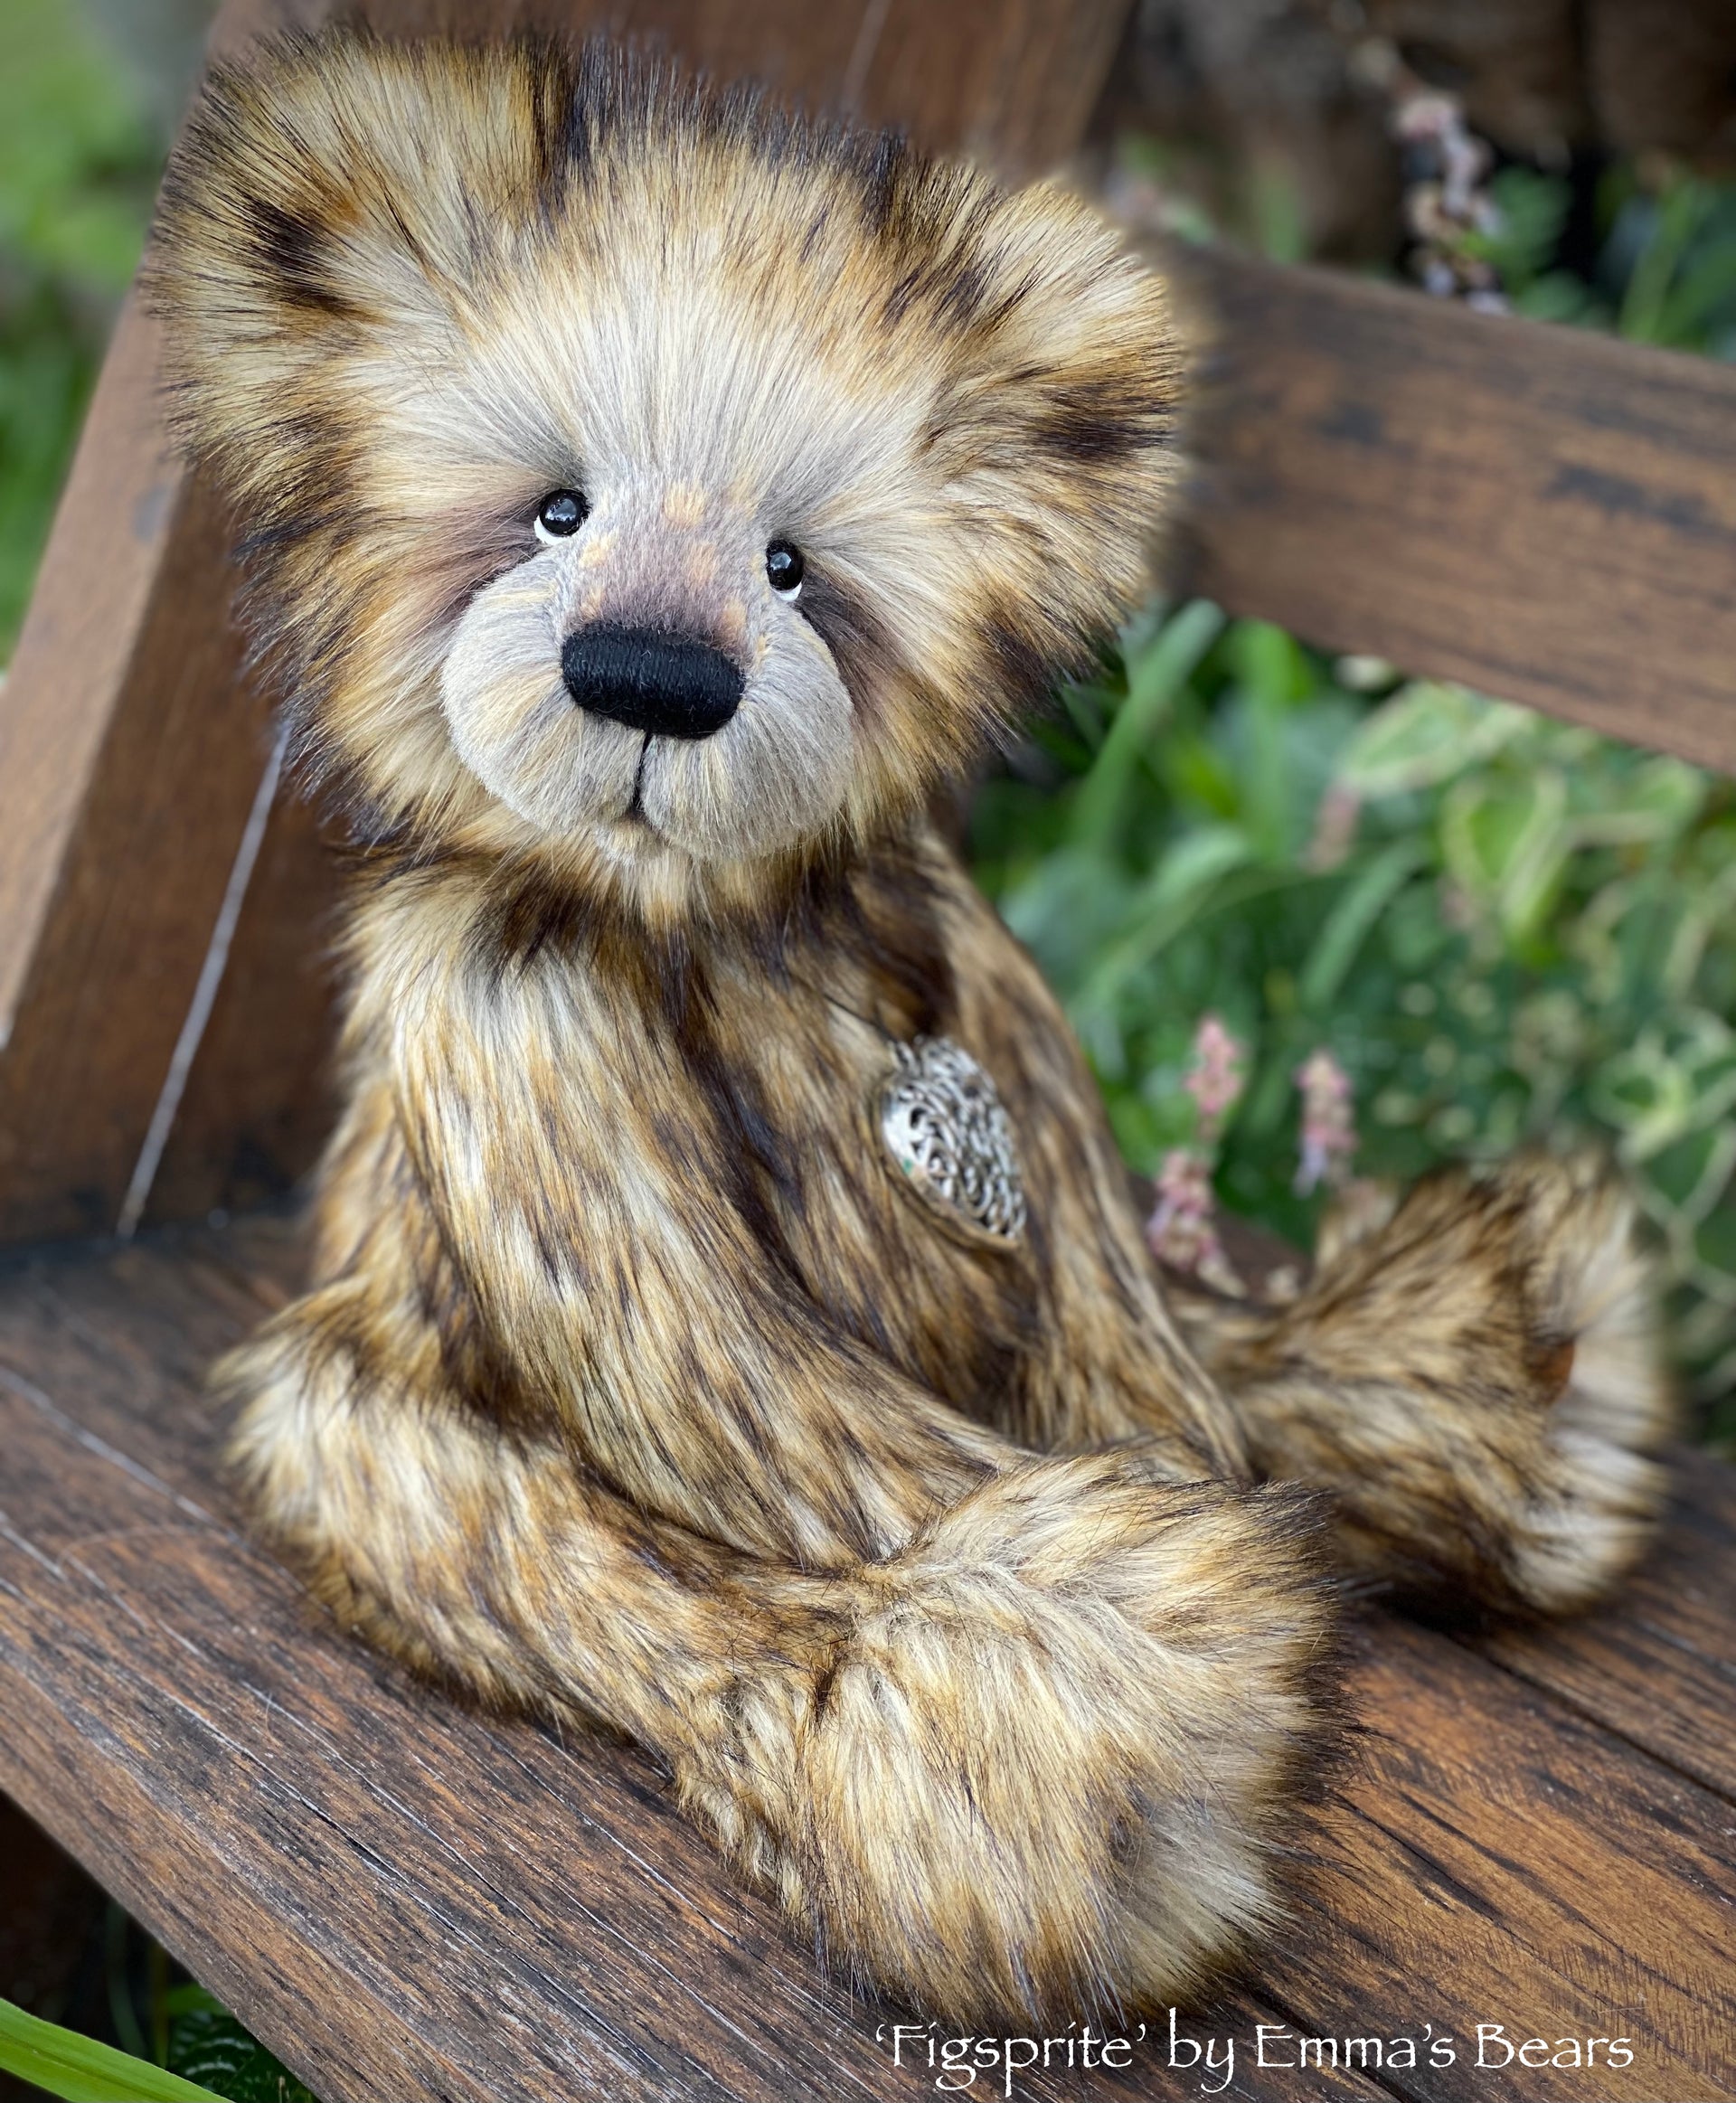 Figsprite - 17.5" skinny faux fur bear by Emmas Bears - OOAK